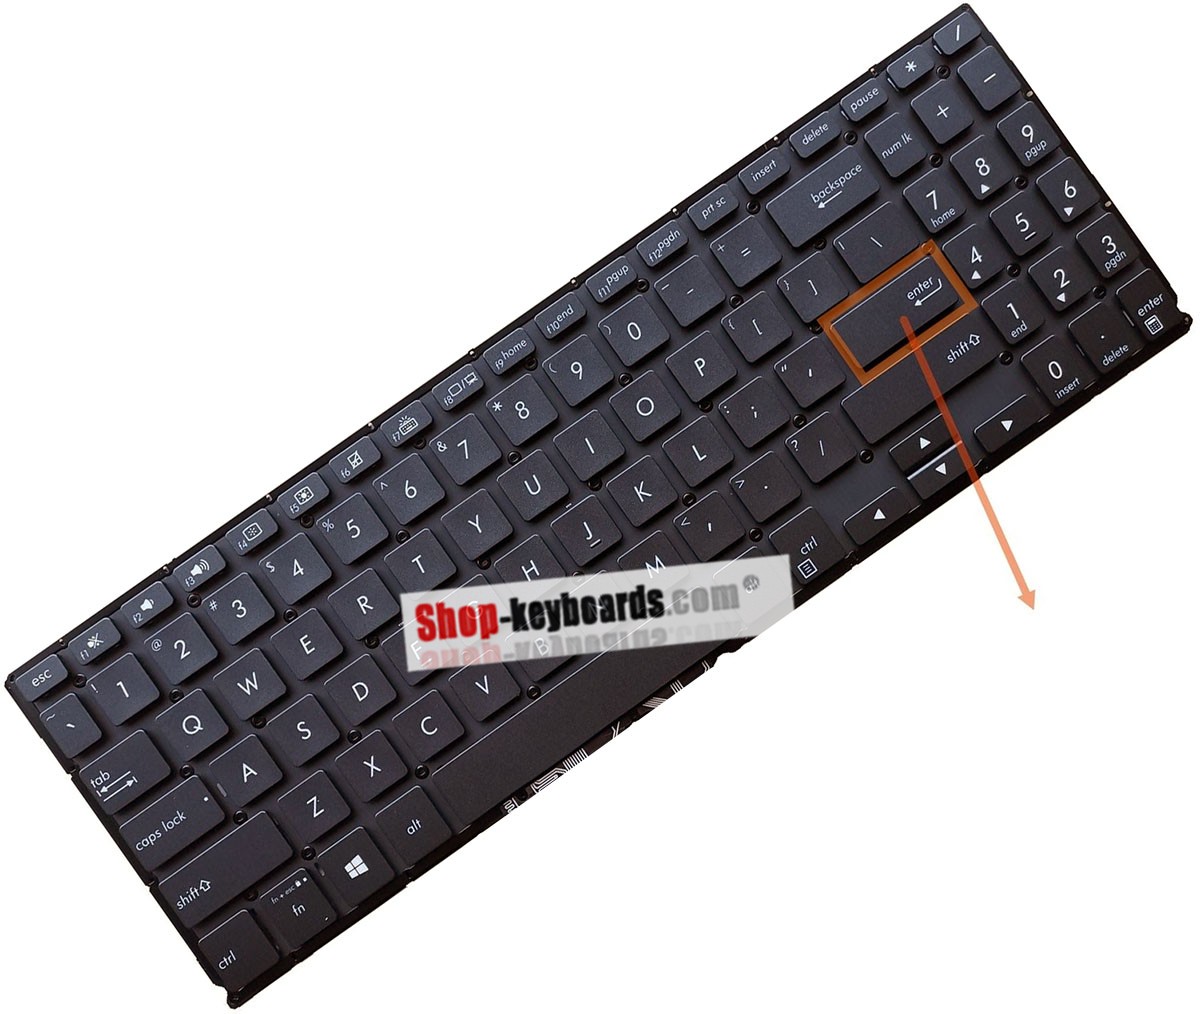 Asus 0KNB0-563BRU00  Keyboard replacement